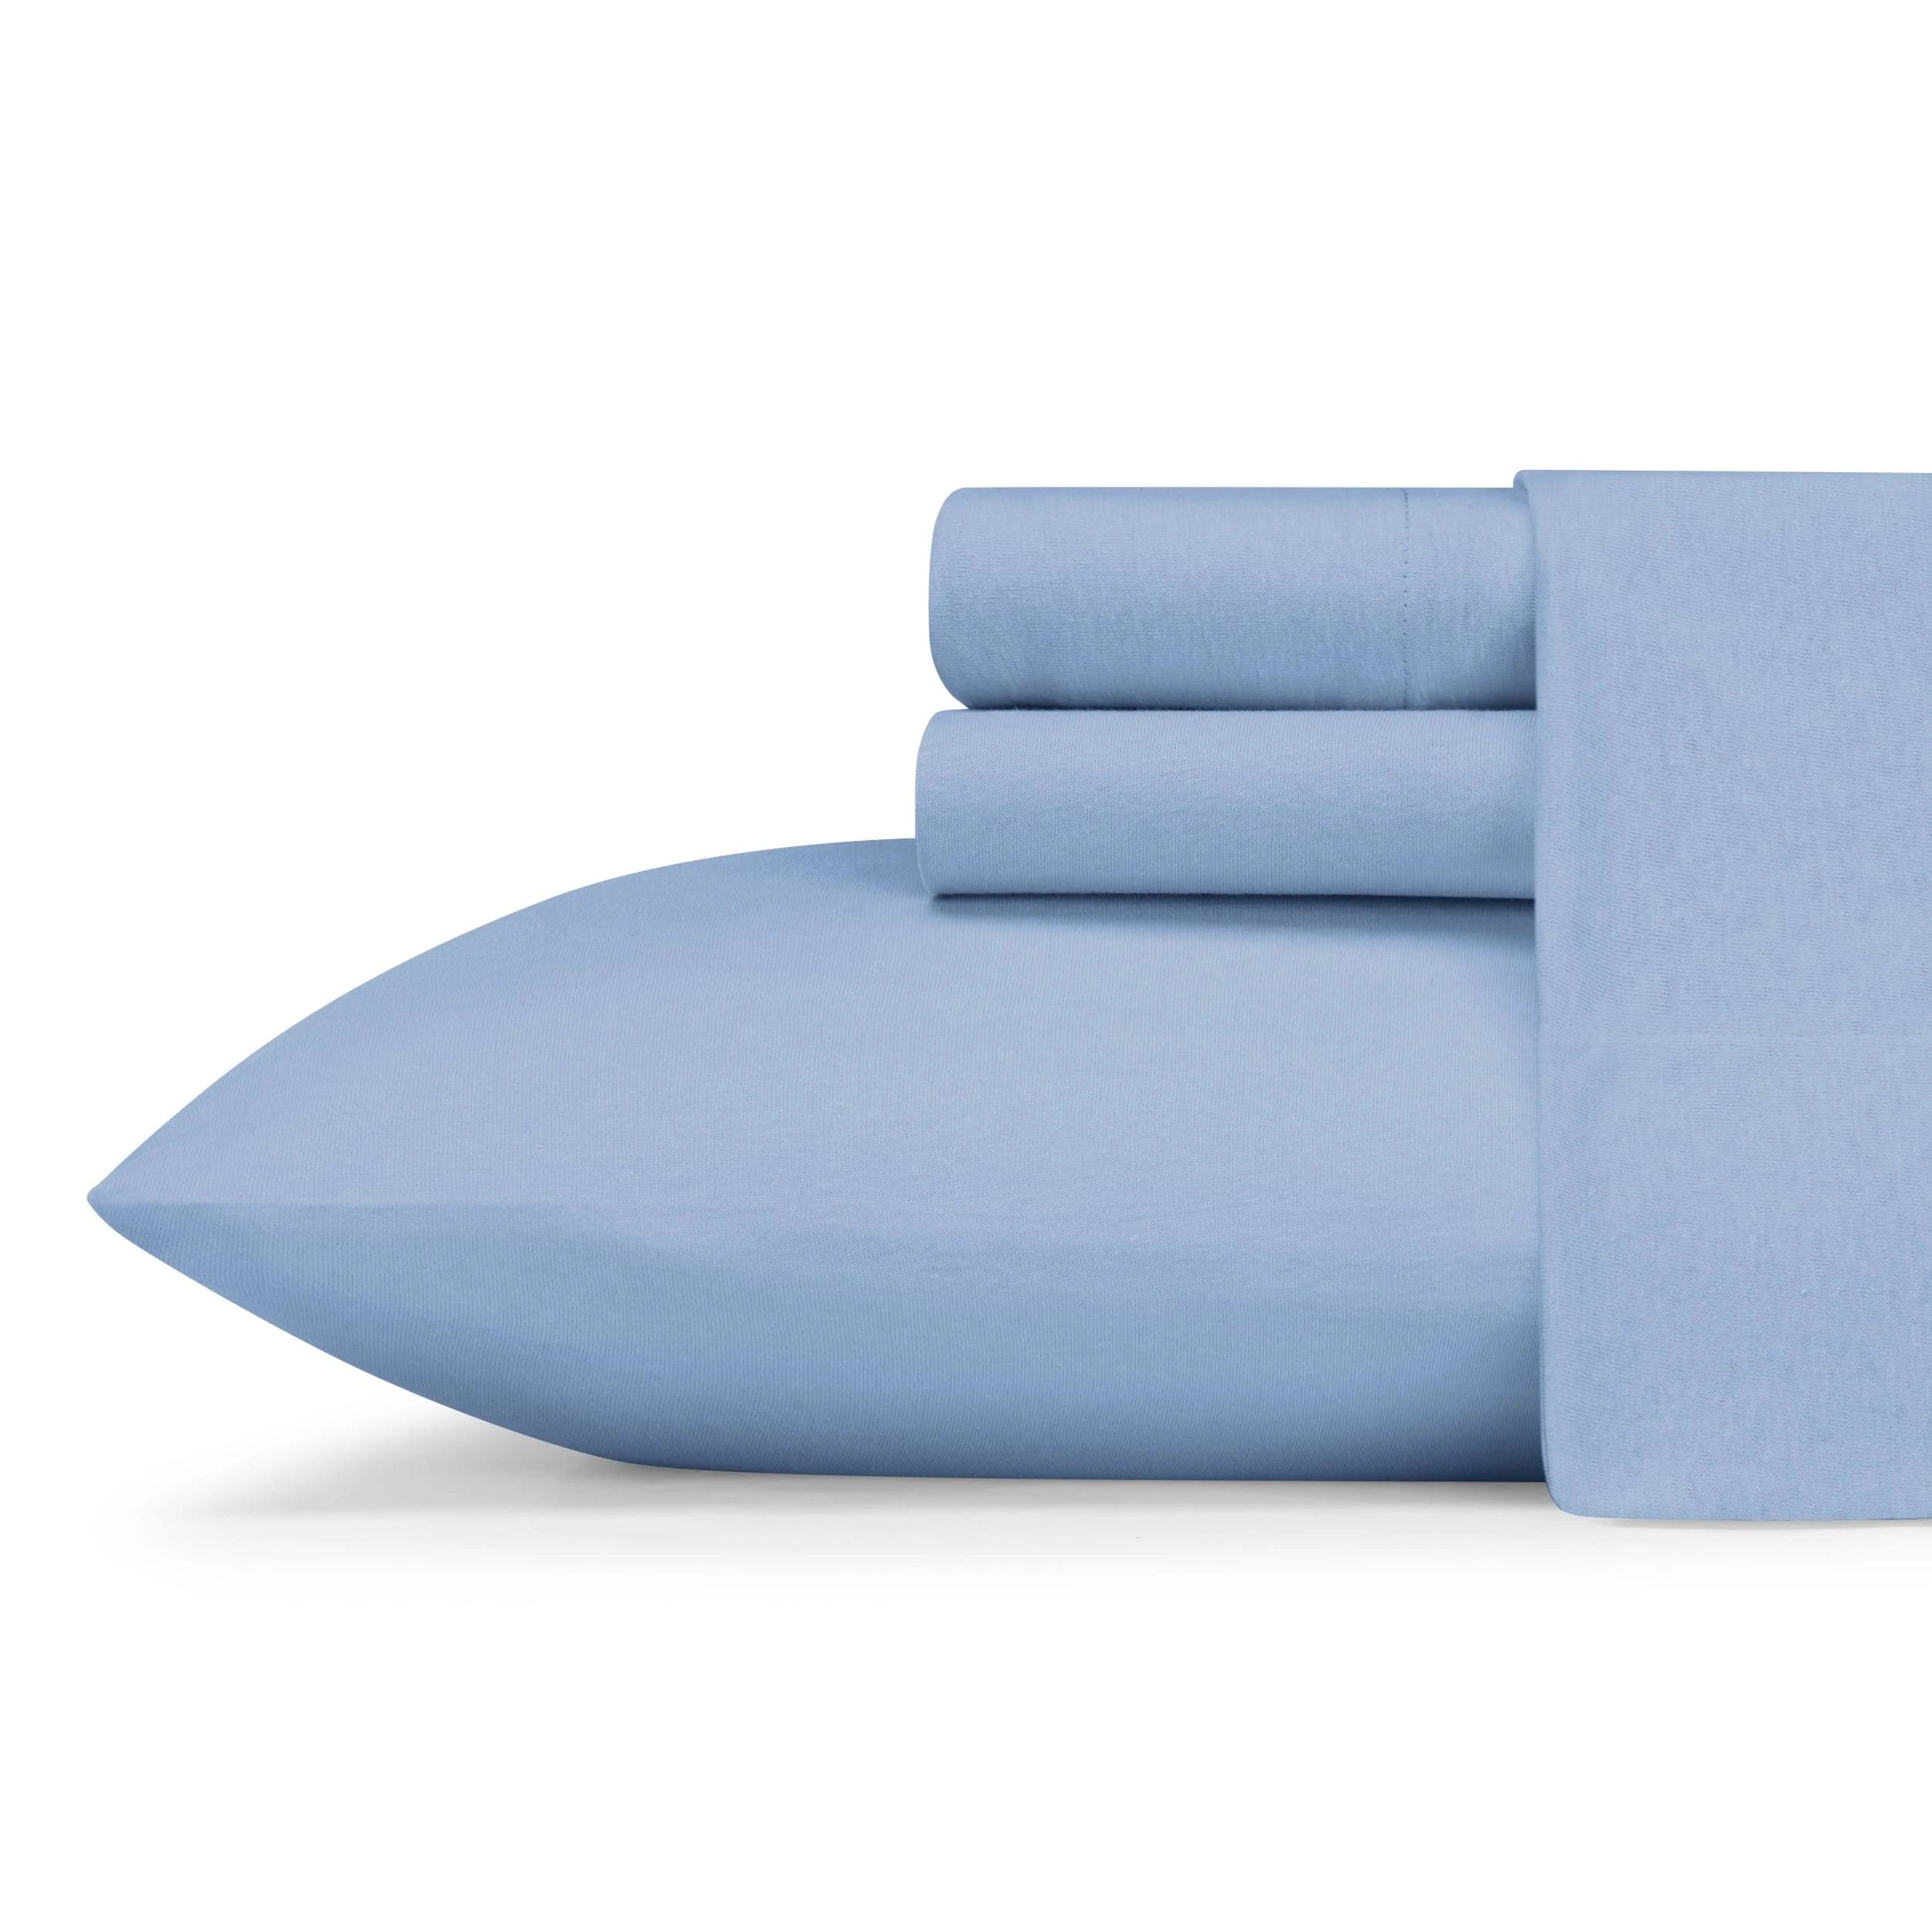 Eddie Bauer Jersey Knit Solid Blue King Sheet Set: Soft & Breathable Cotton Bedding | Image